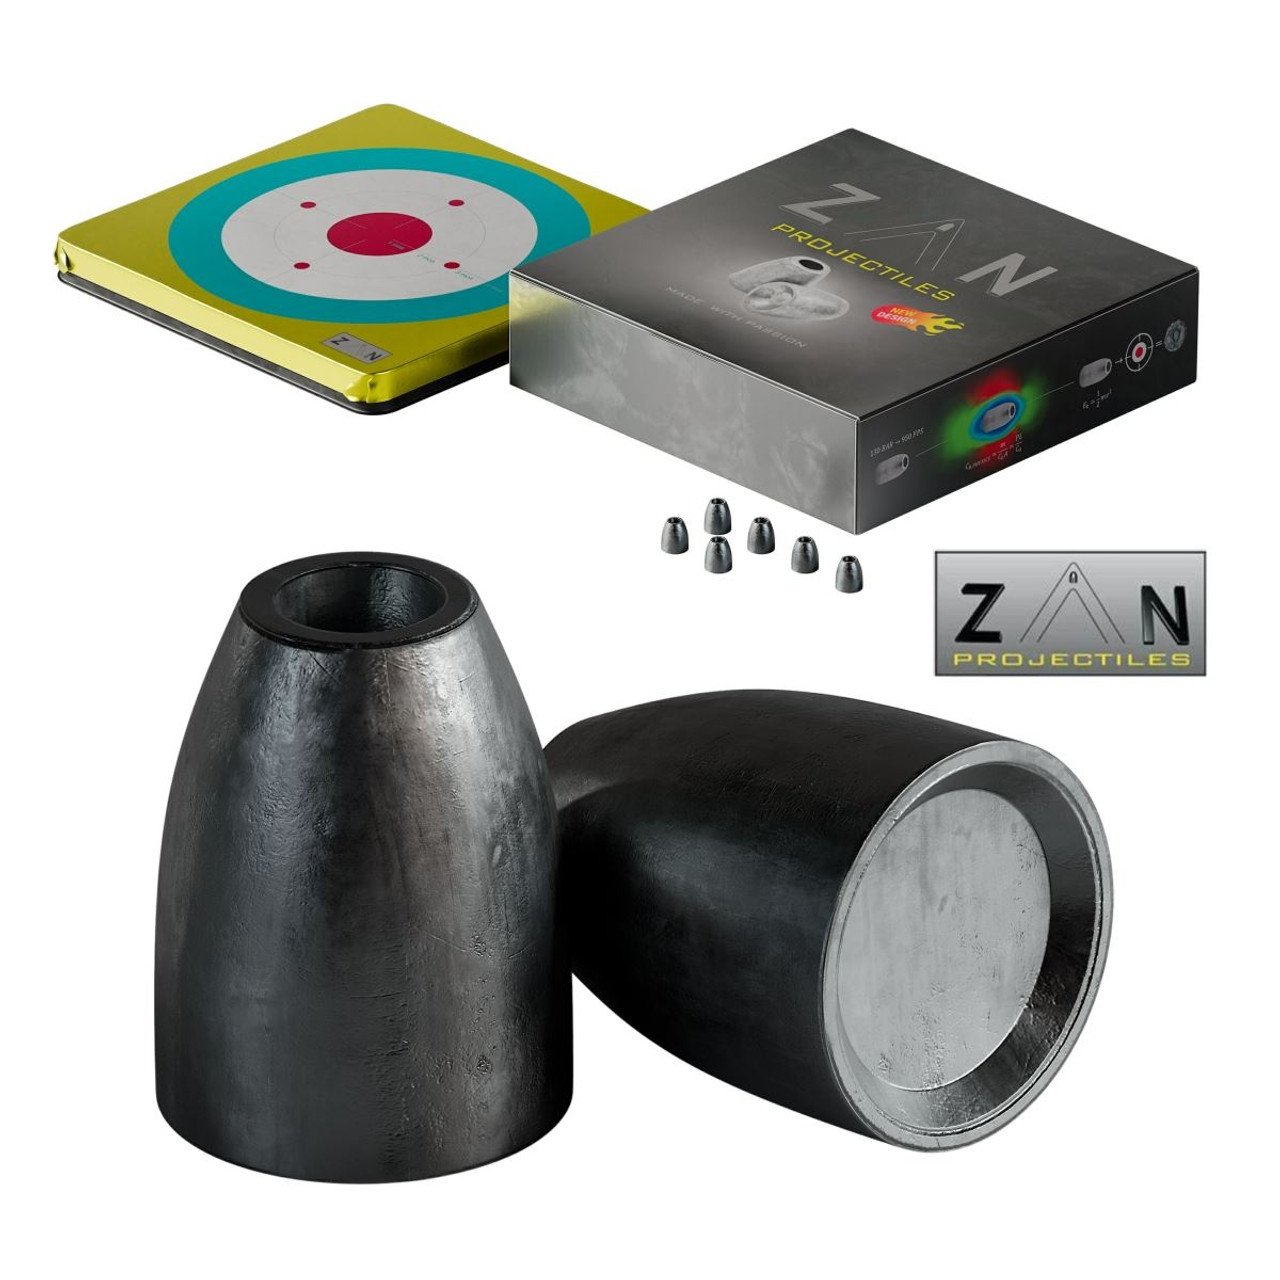 ZAN Projectiles Slugs .250 33gr Hollow Point Pellets for Air Rifles 200pk